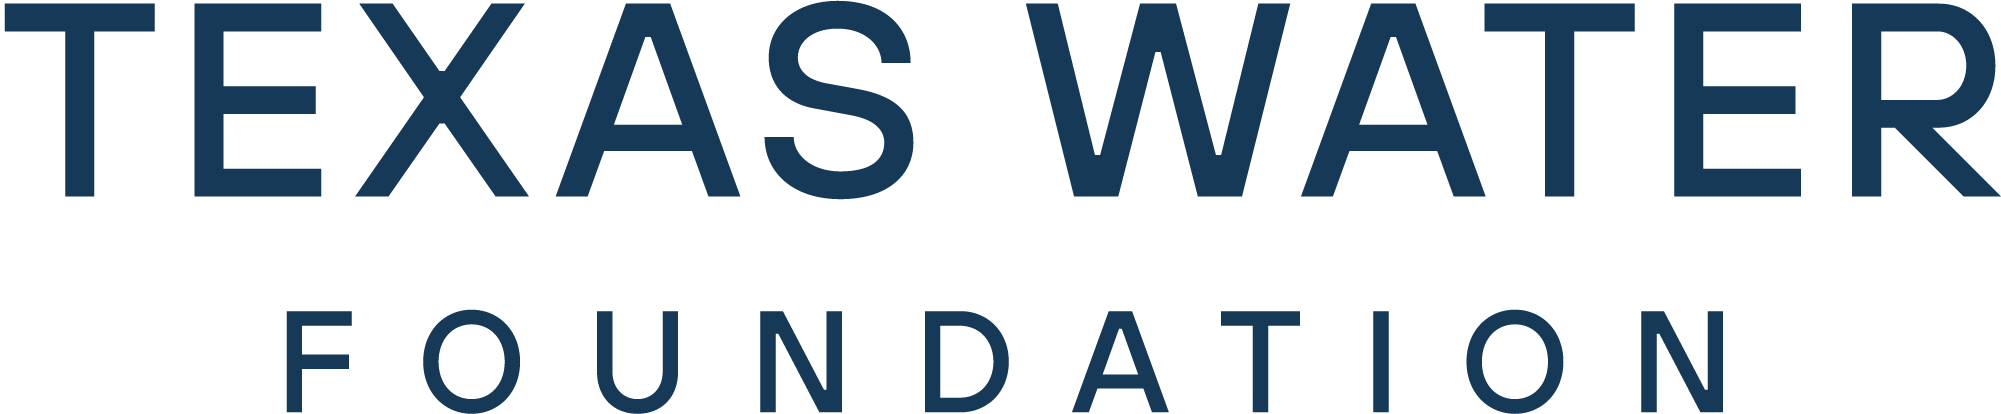 Texas Water Foundation logo